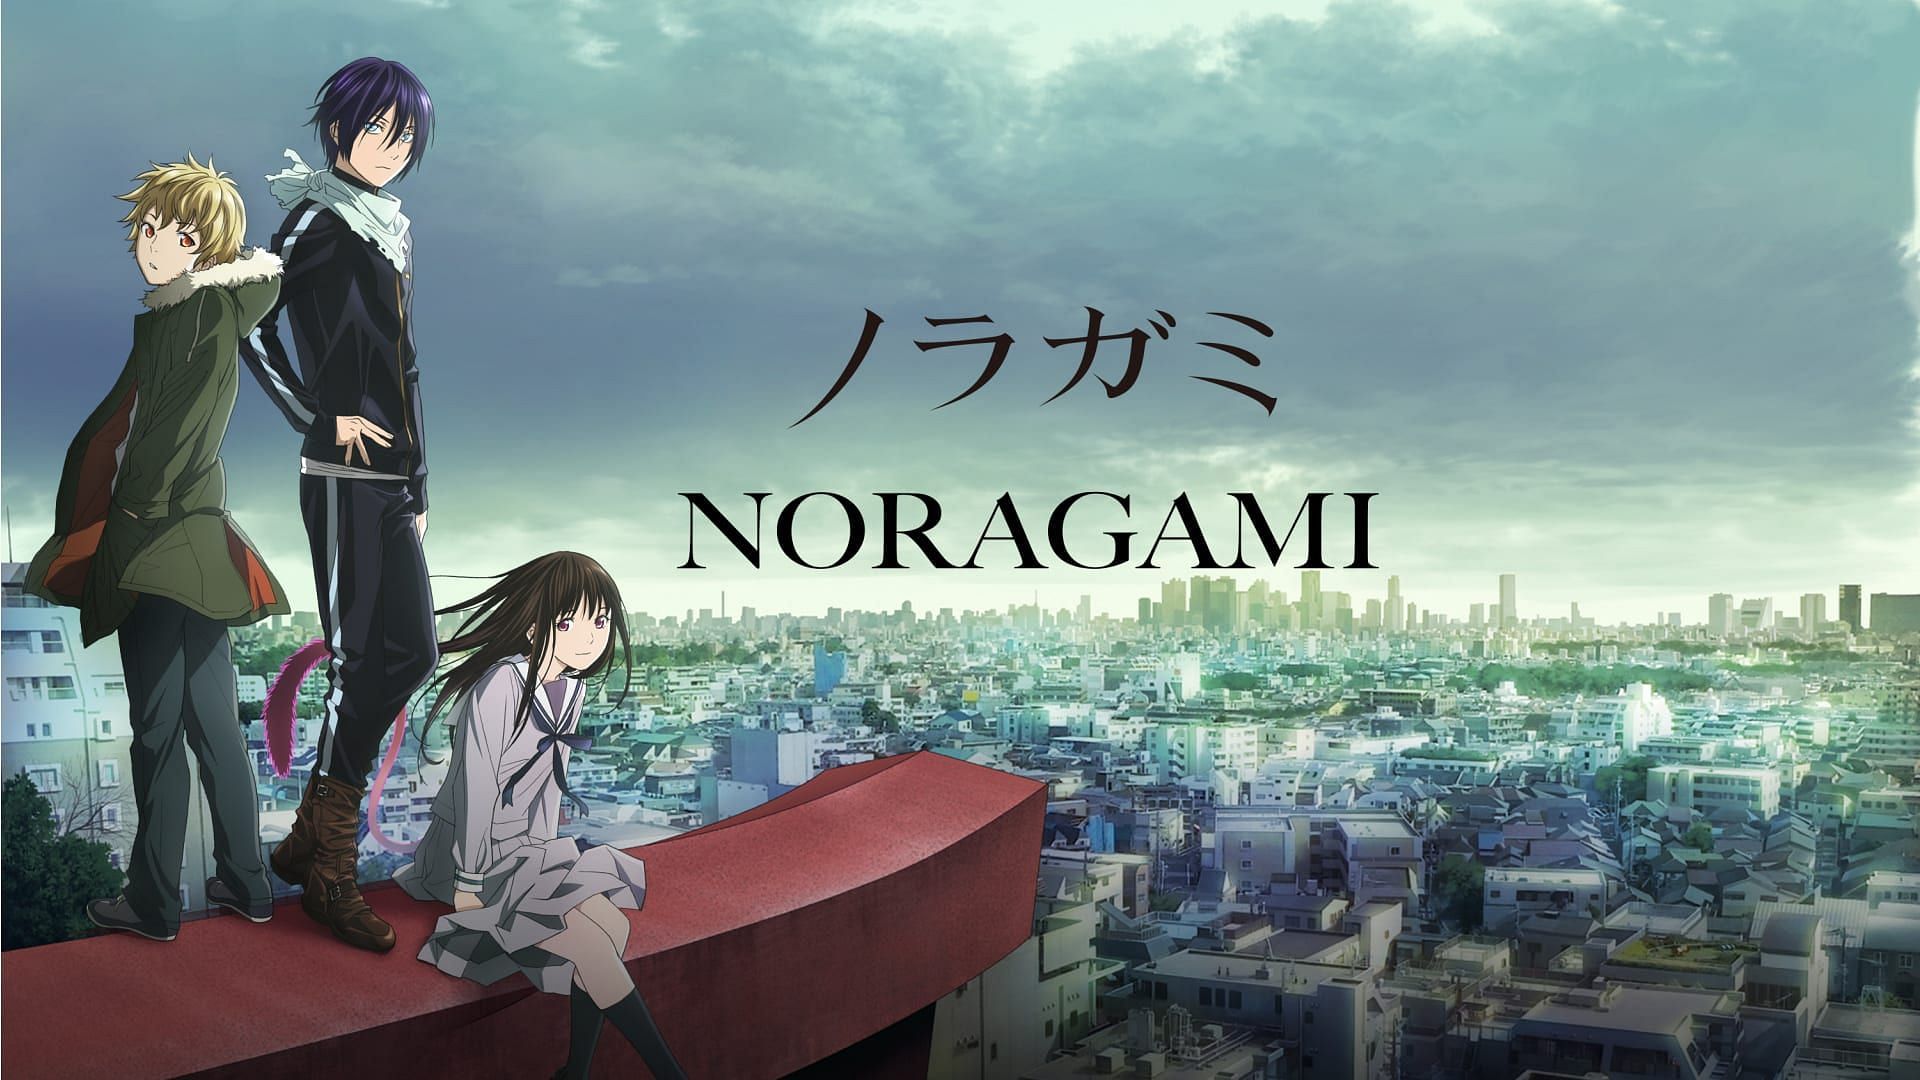 Noragami anime sequel rumored to be in production from studio BONES (Image via BONES)